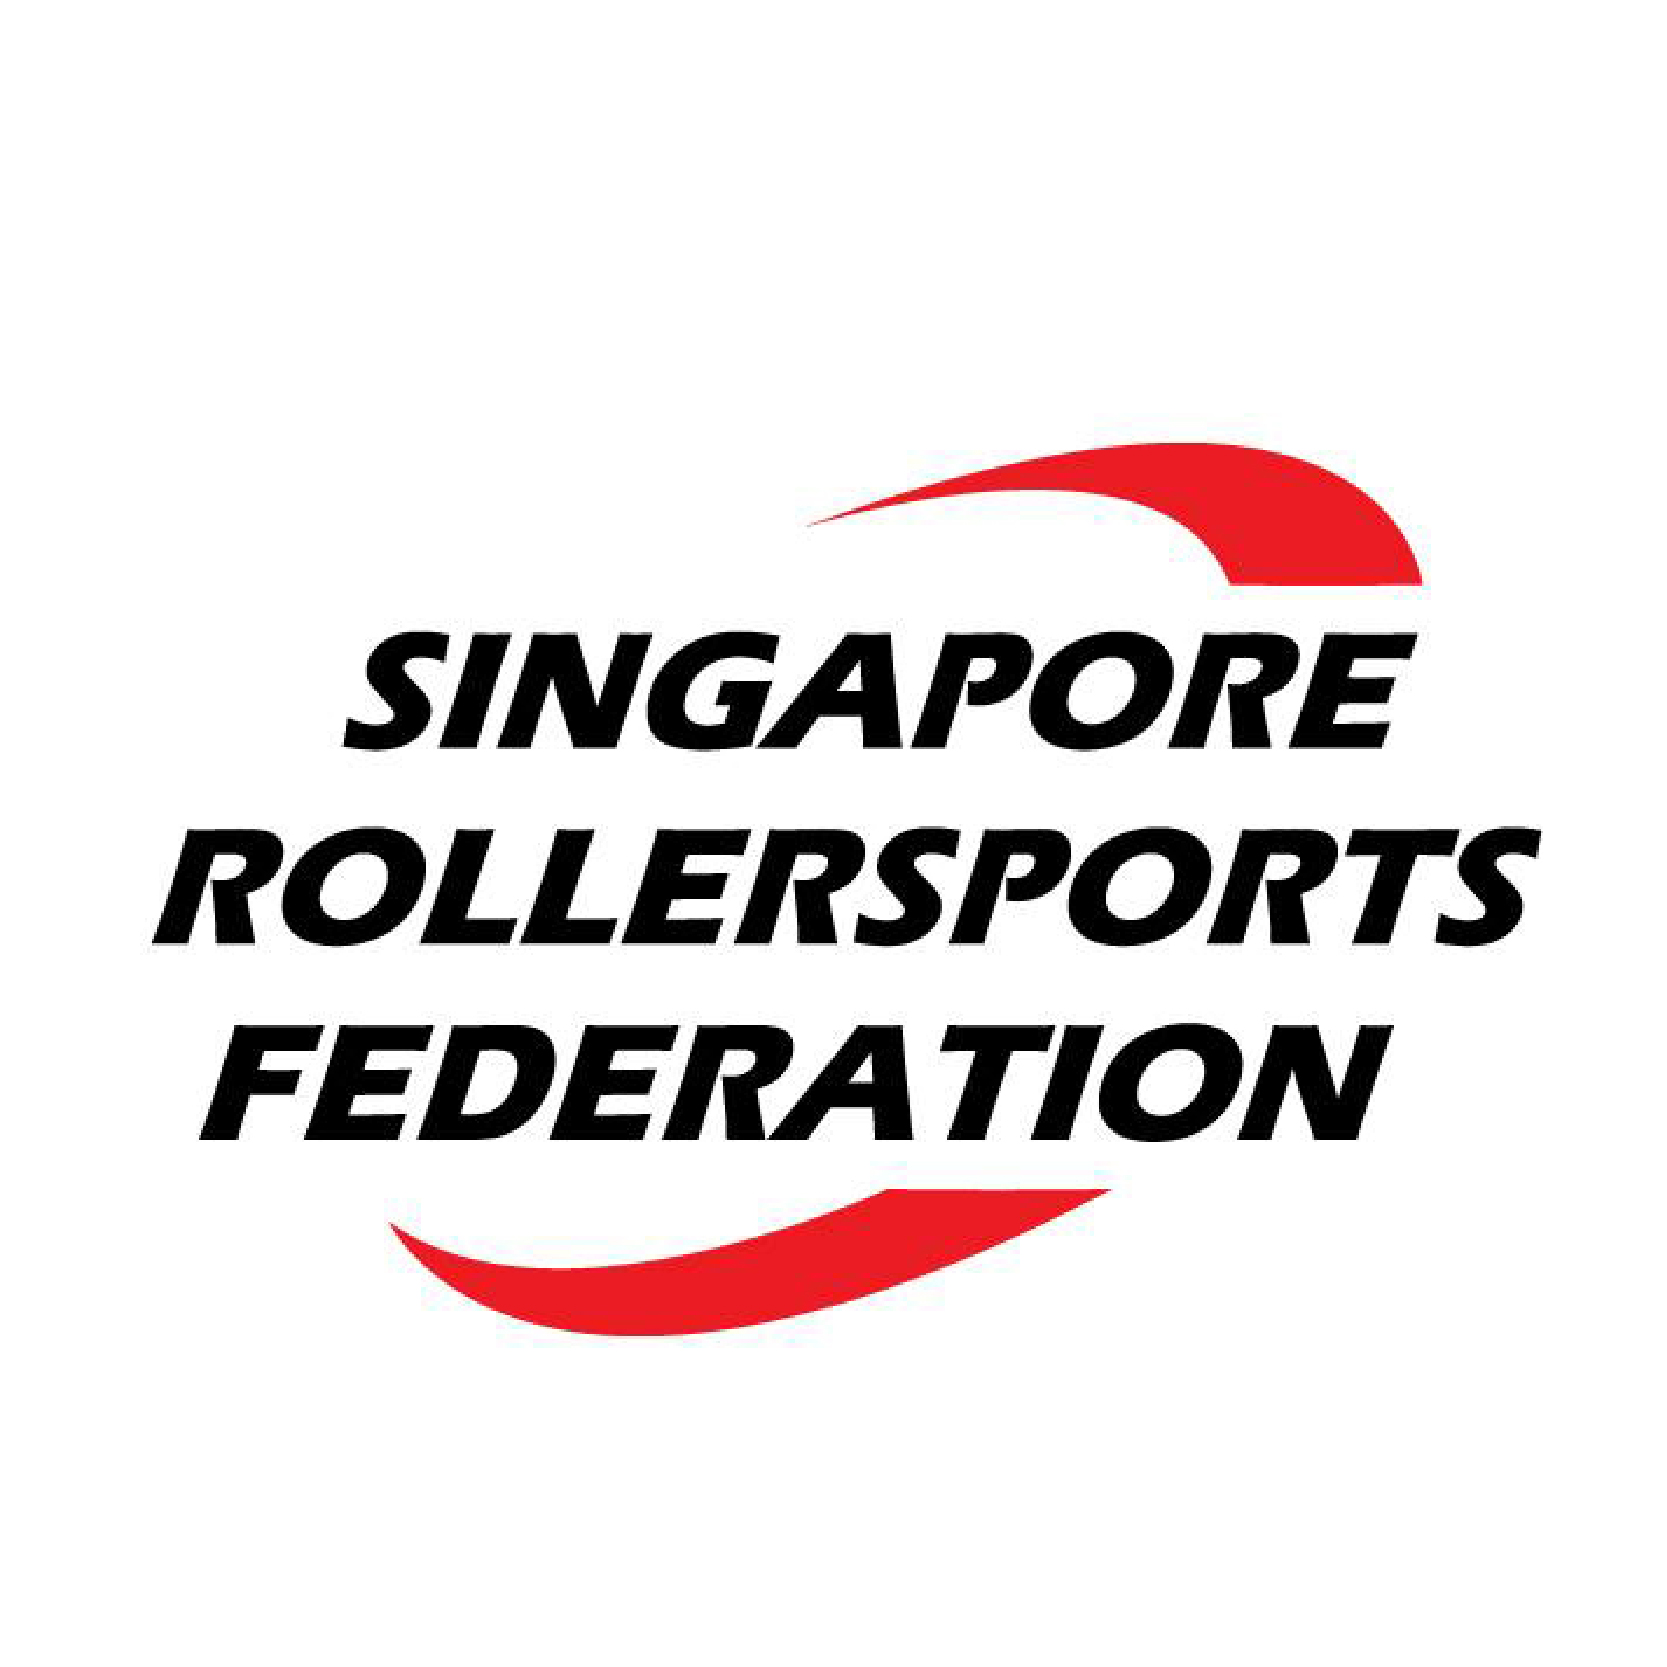 Singapore Rollersports Federation